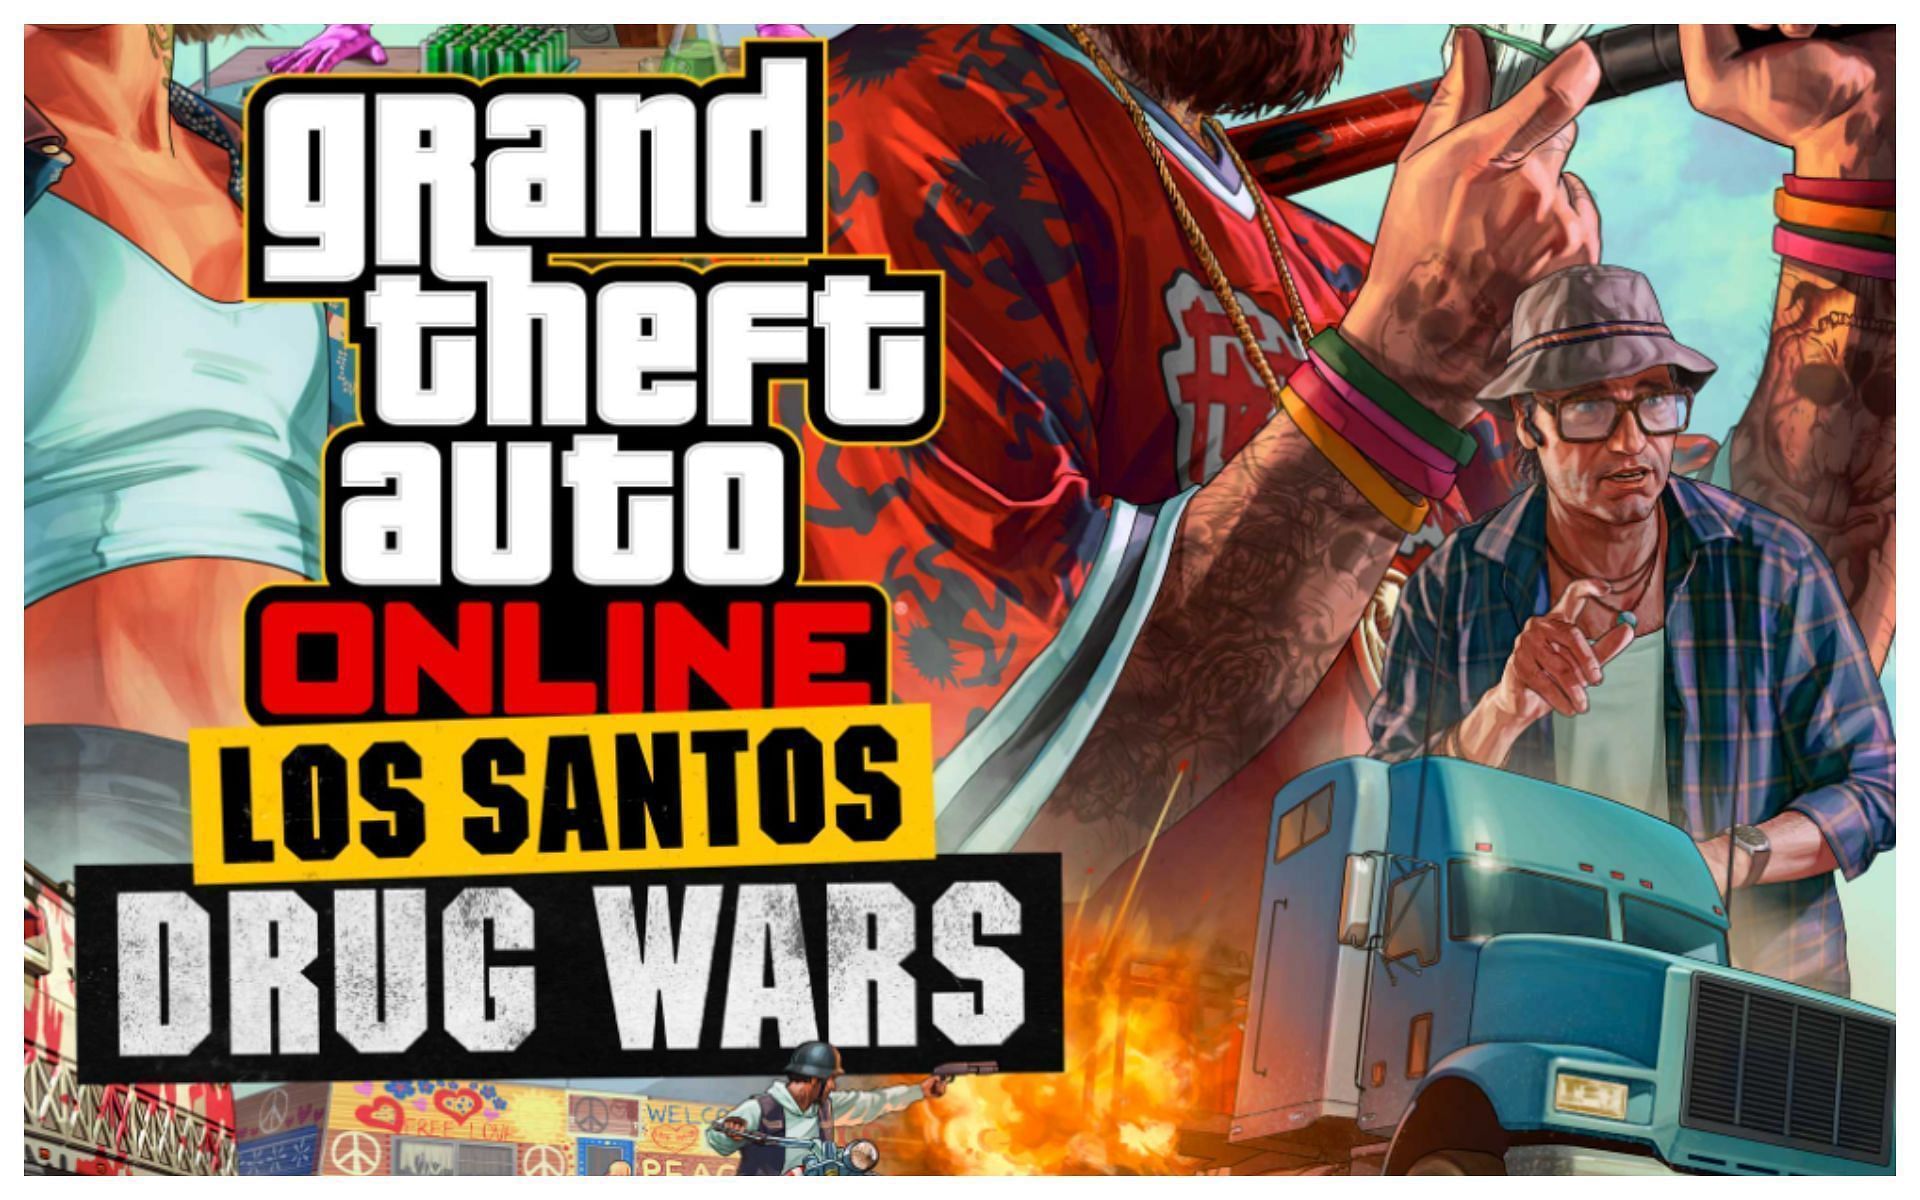 Cover art for Los Santos Drug Wars DLC (Image via Rockstar Games)